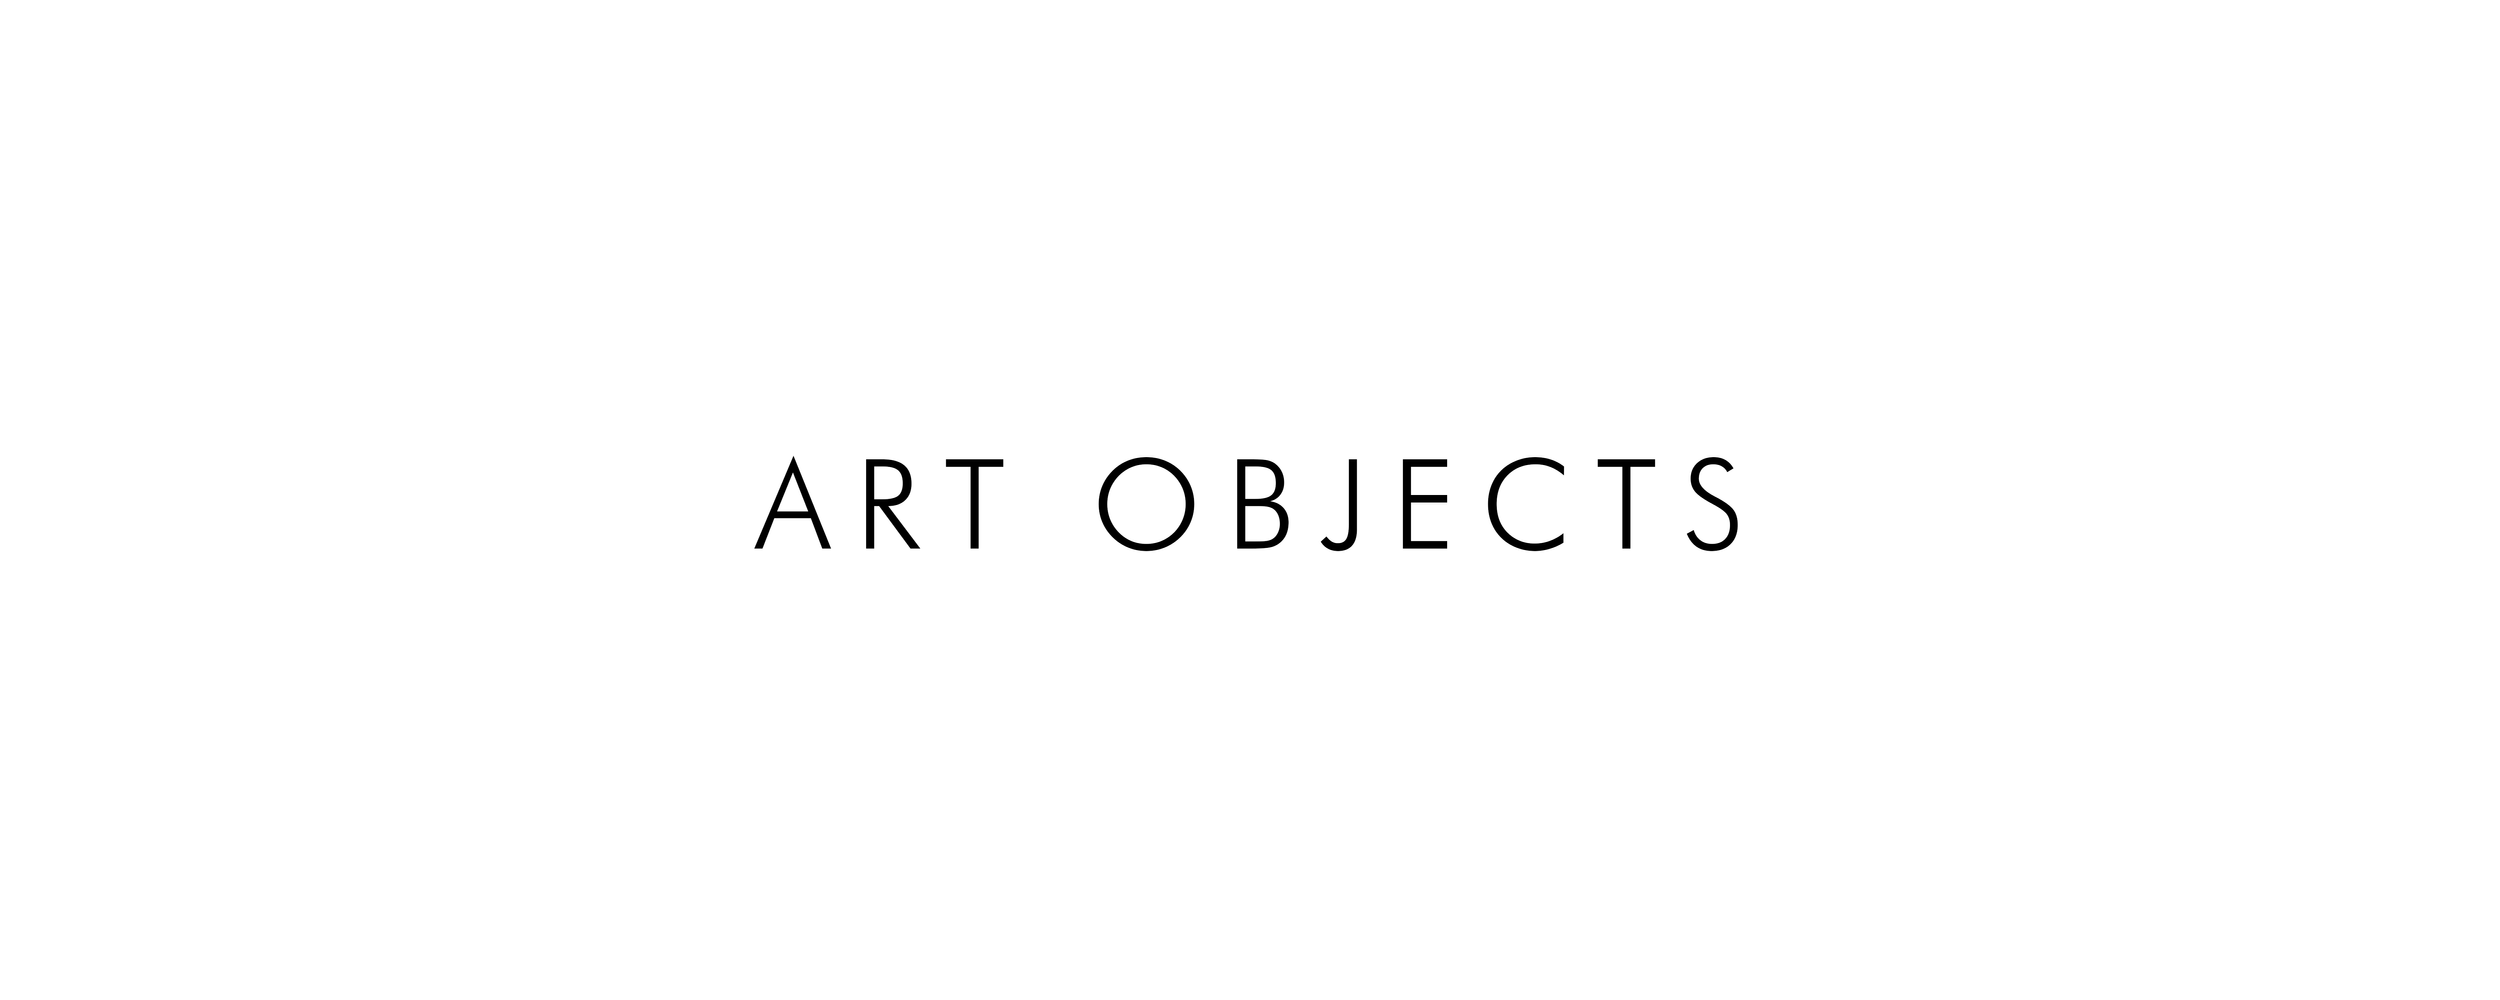 Menu_art-objects_light.png